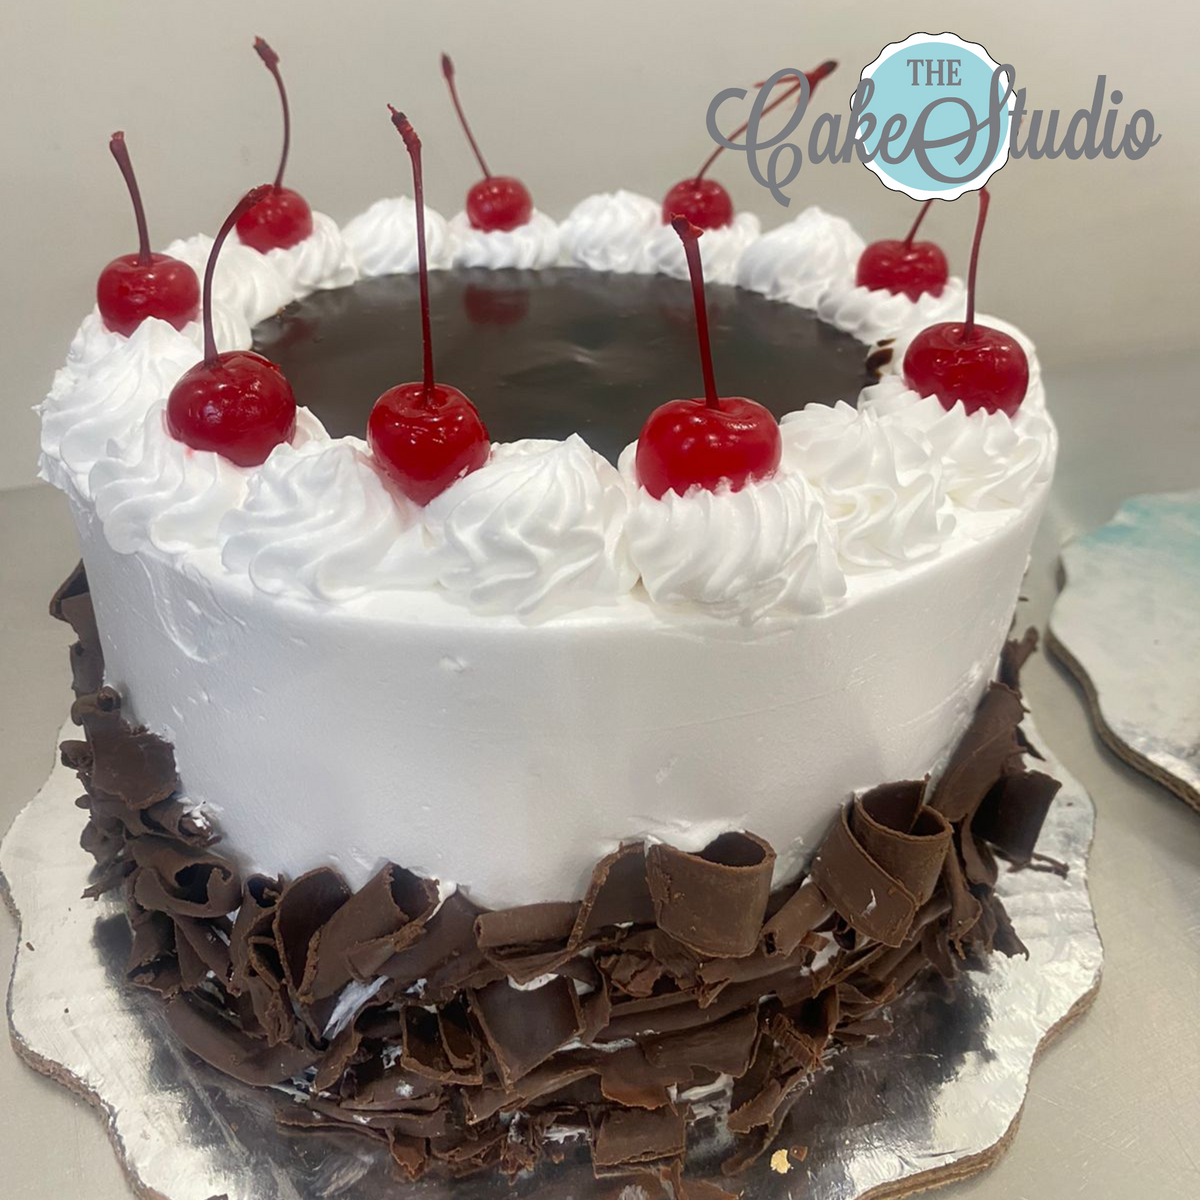 Báscula Digital – Cake Studio Mty